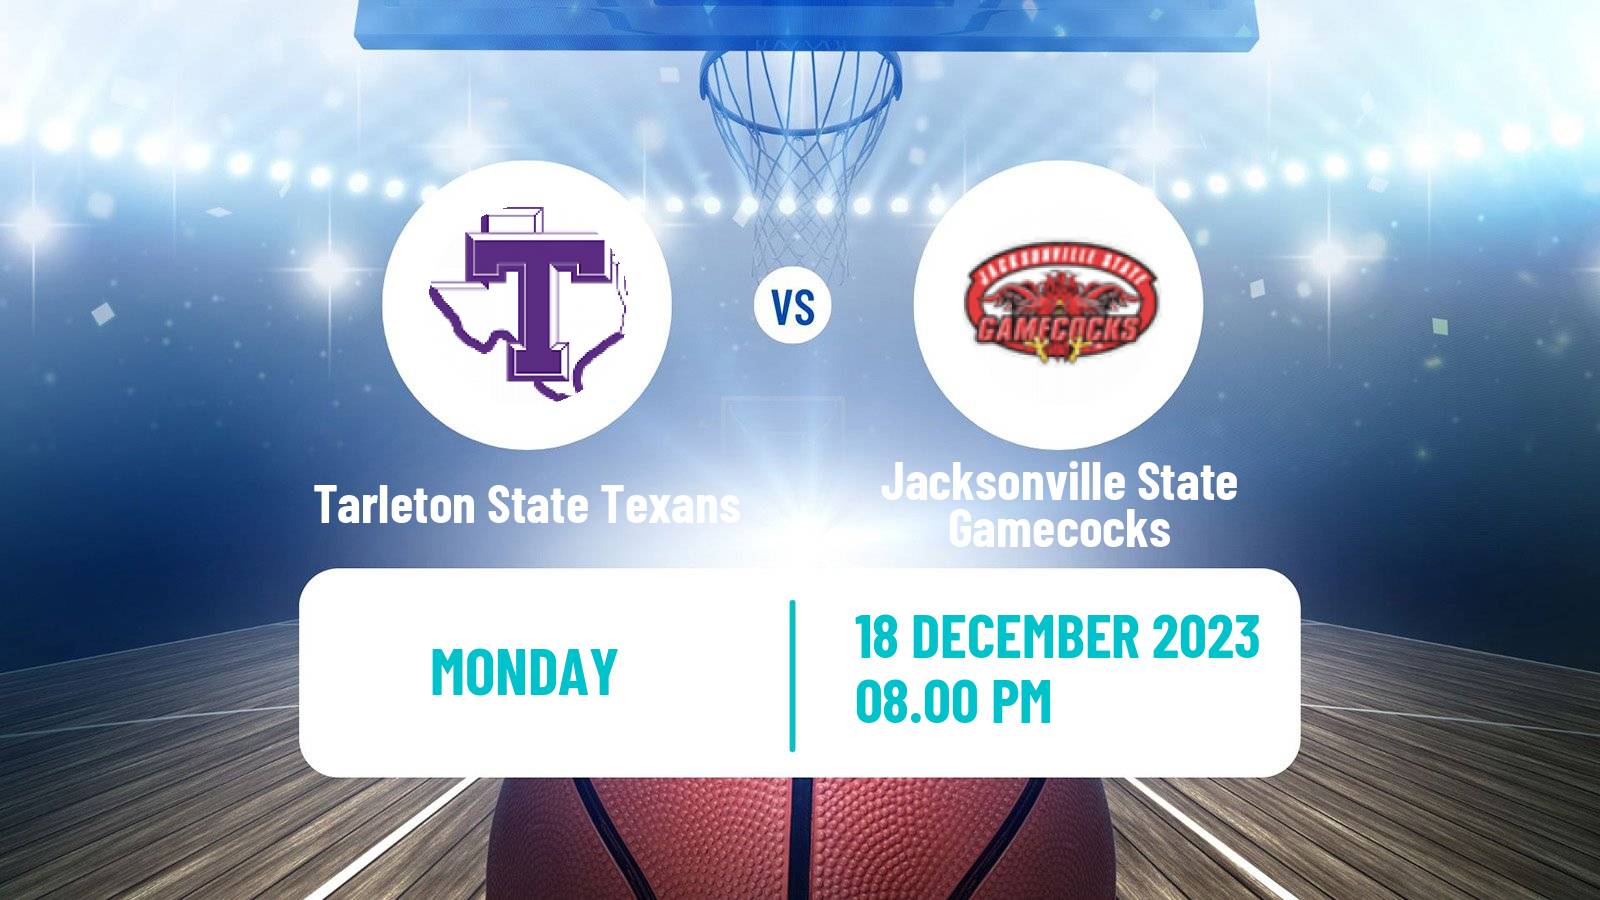 Basketball NCAA College Basketball Tarleton State Texans - Jacksonville State Gamecocks